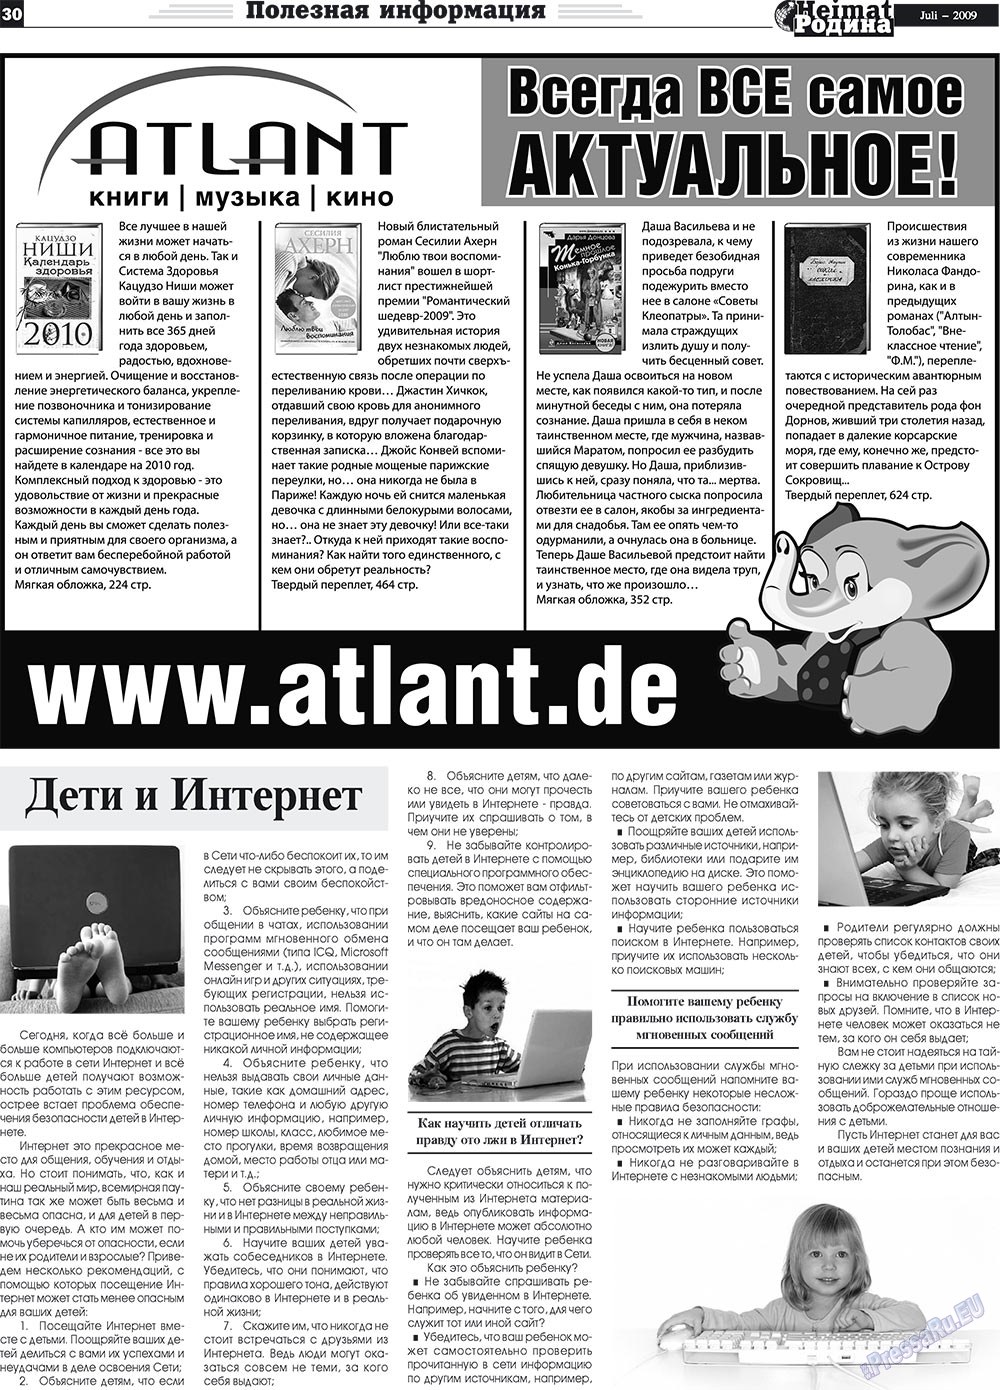 Heimat-Родина, газета. 2009 №7 стр.30